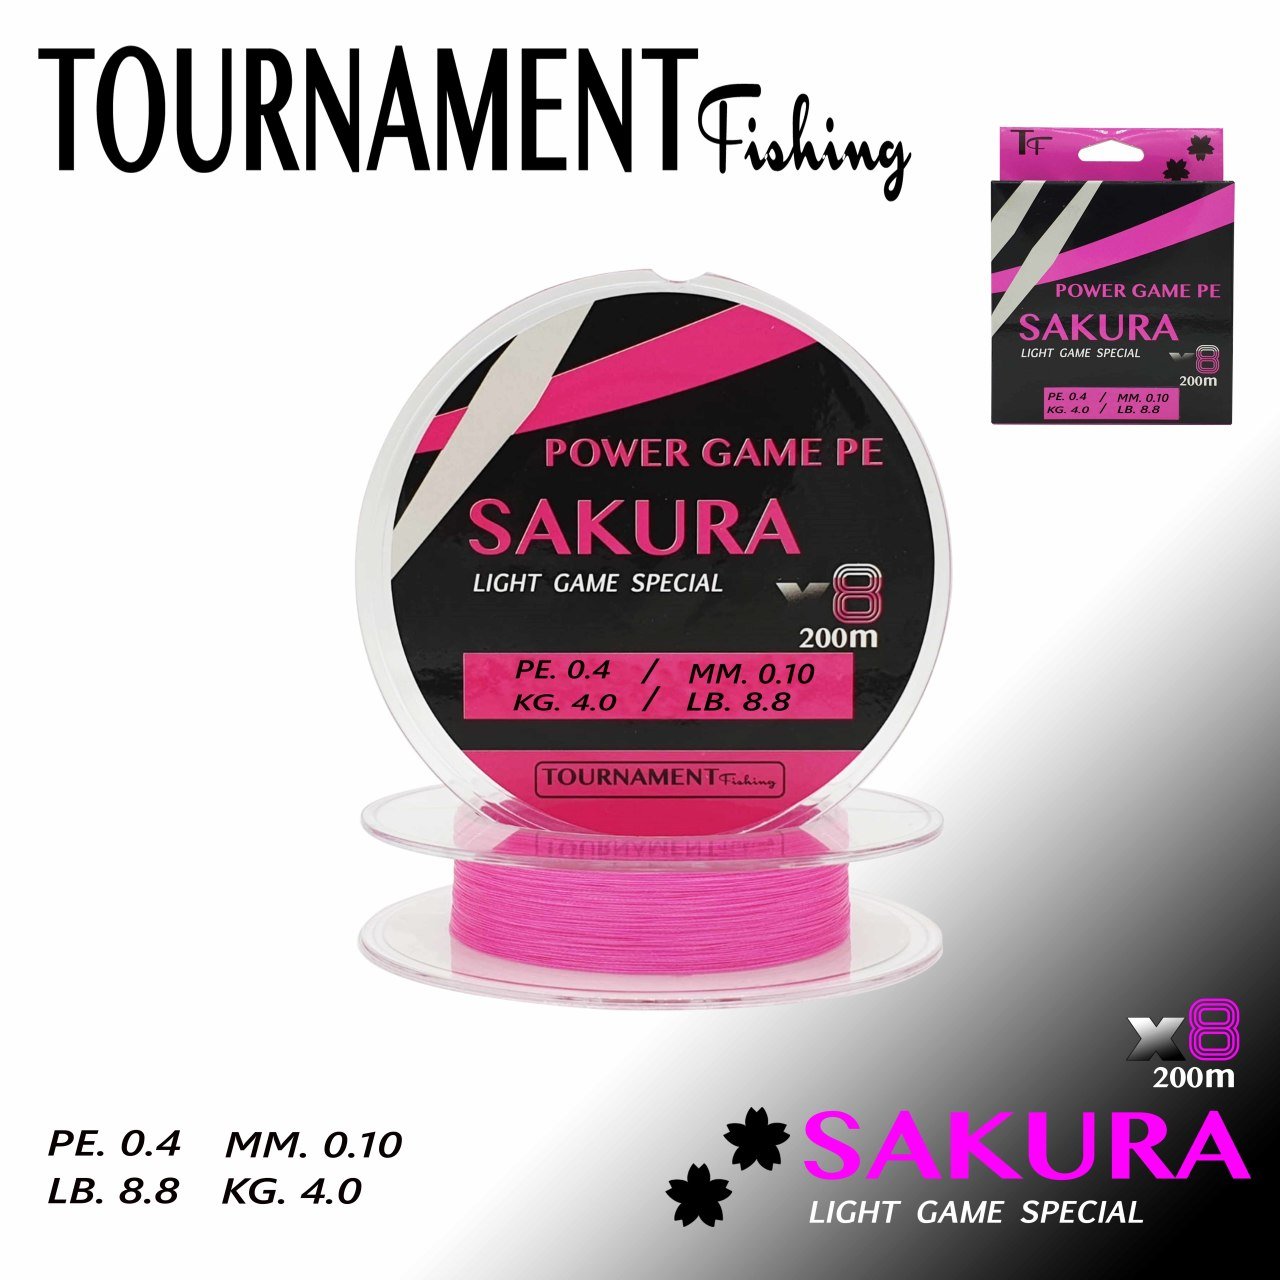 TOURNAMENT fishing Power game pe SAKURA Light Game Special X8 PE.0.4/MM0.10 KG4.0/LB.8.8